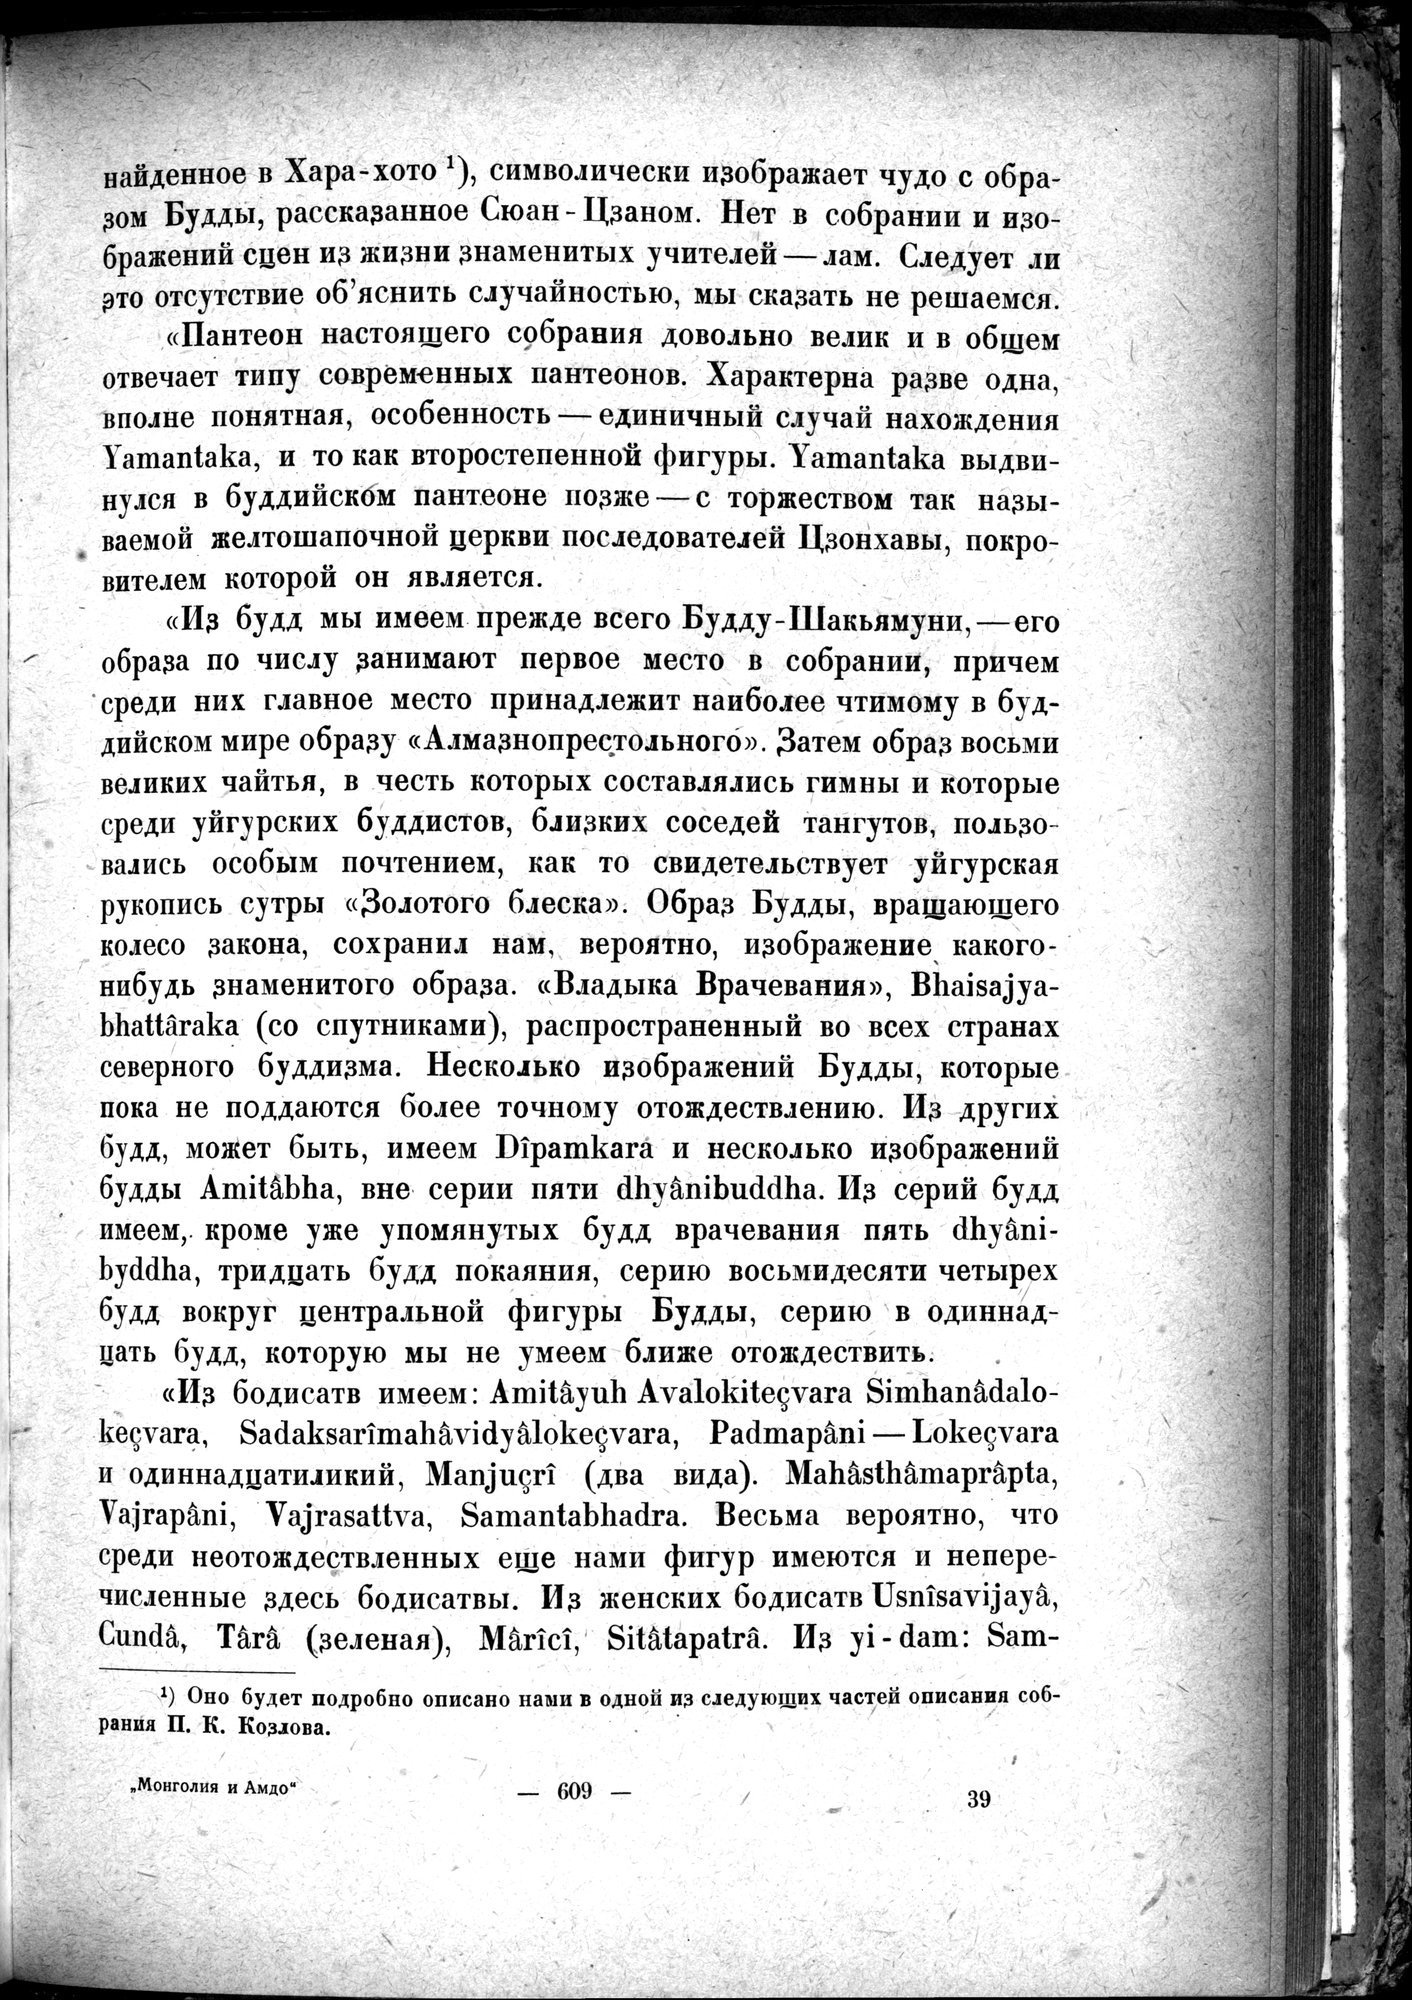 Mongoliya i Amdo i mertby gorod Khara-Khoto : vol.1 / Page 699 (Grayscale High Resolution Image)